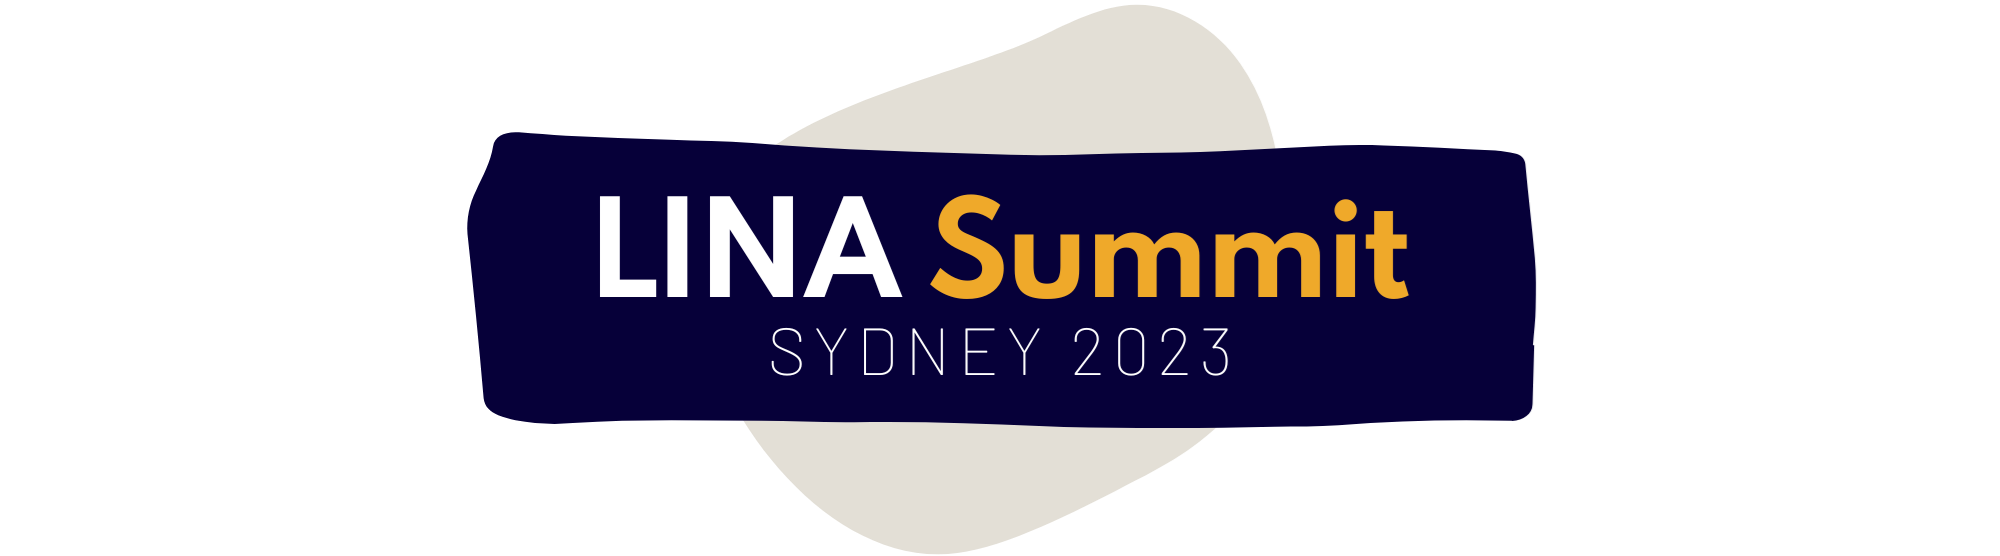 LINA Summit 2023